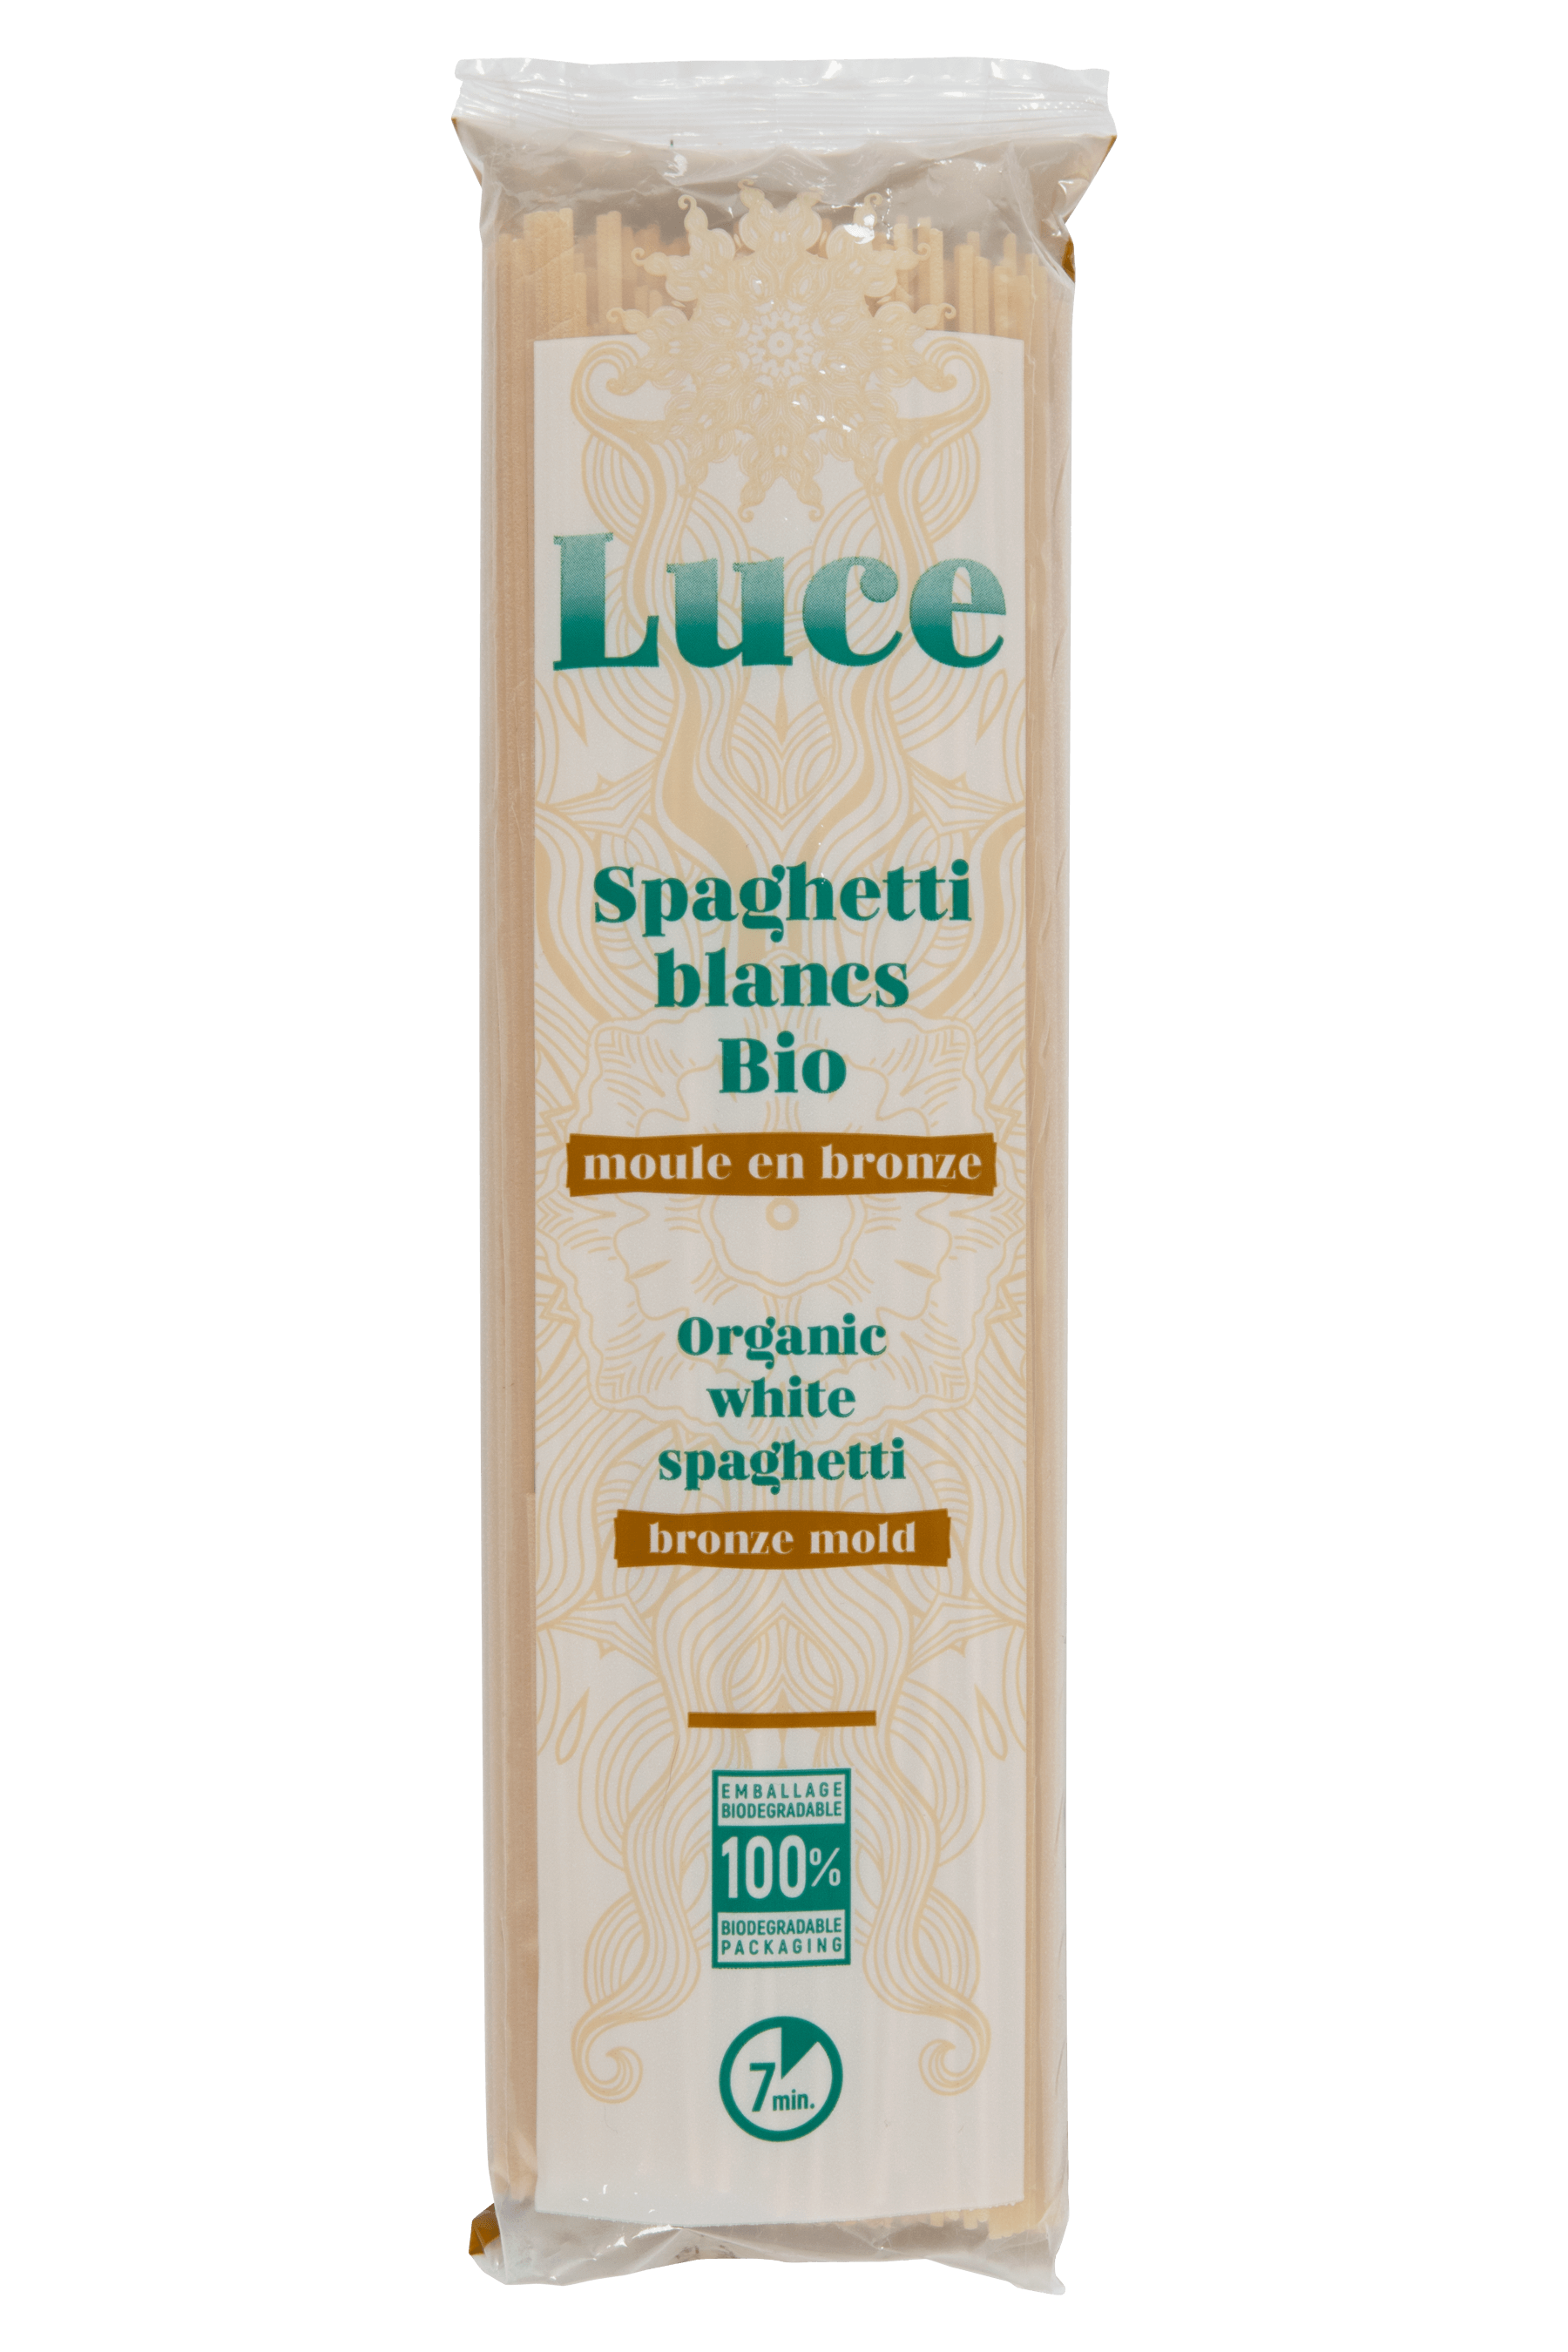 Luce Spaghetti blancs bio 500g